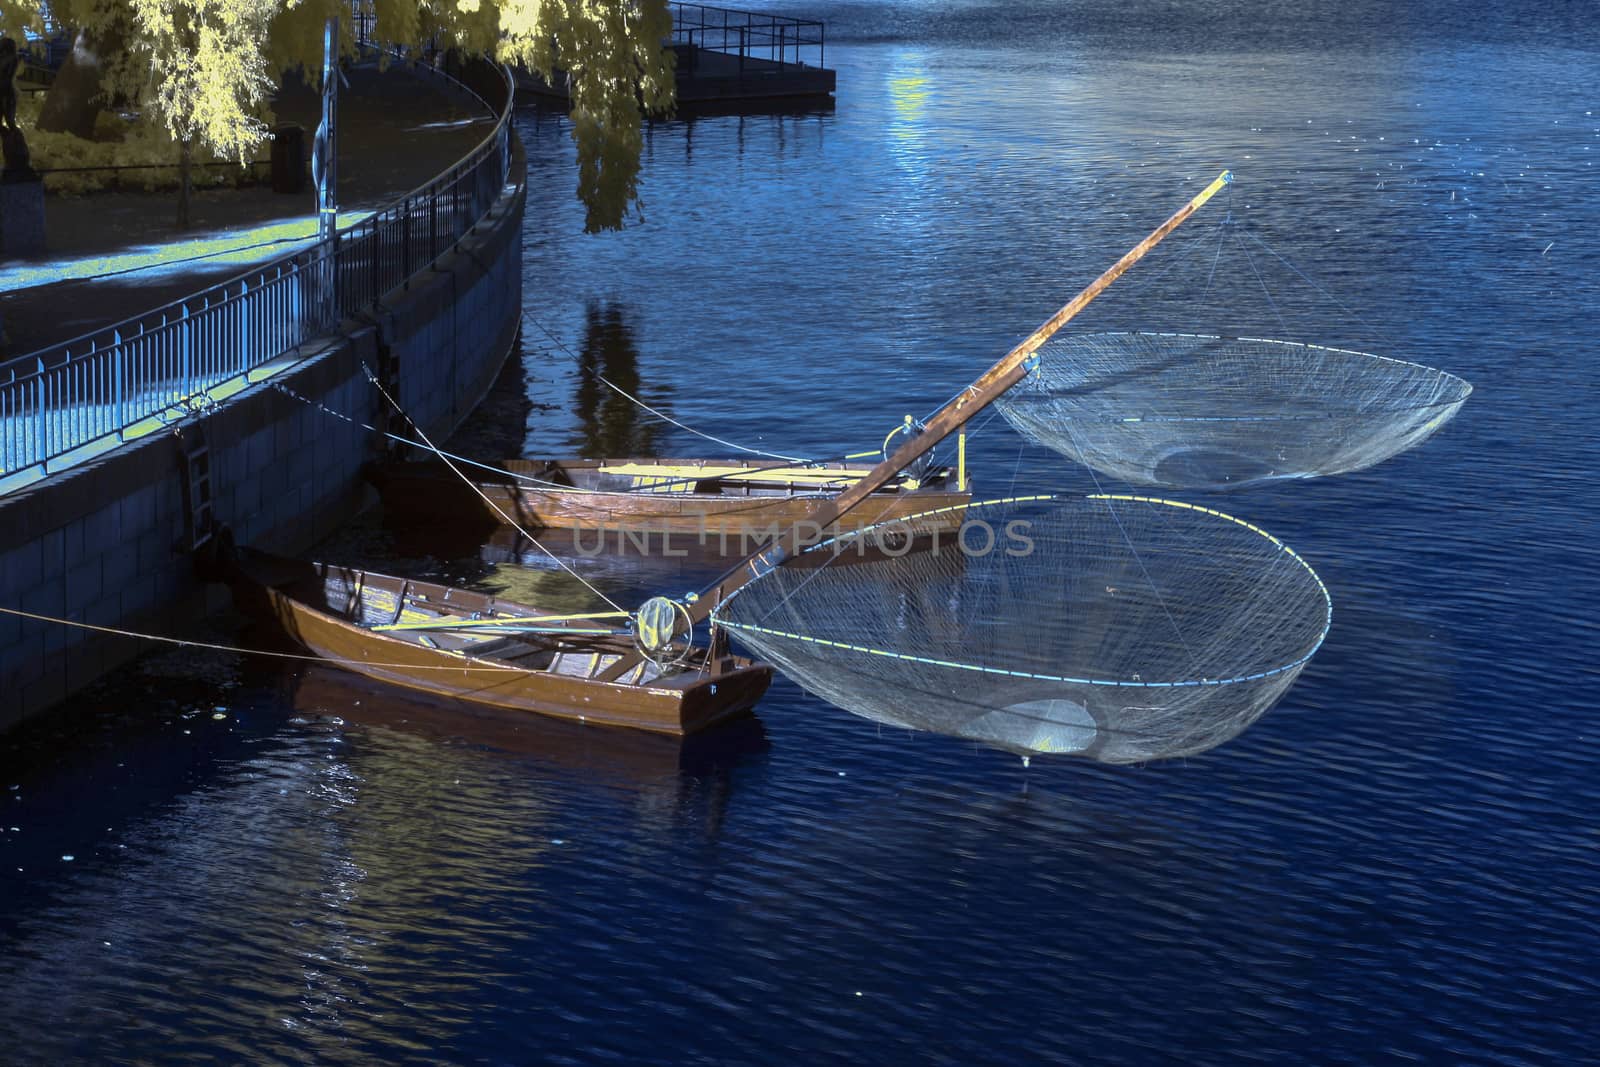 Old style Shrimp boats